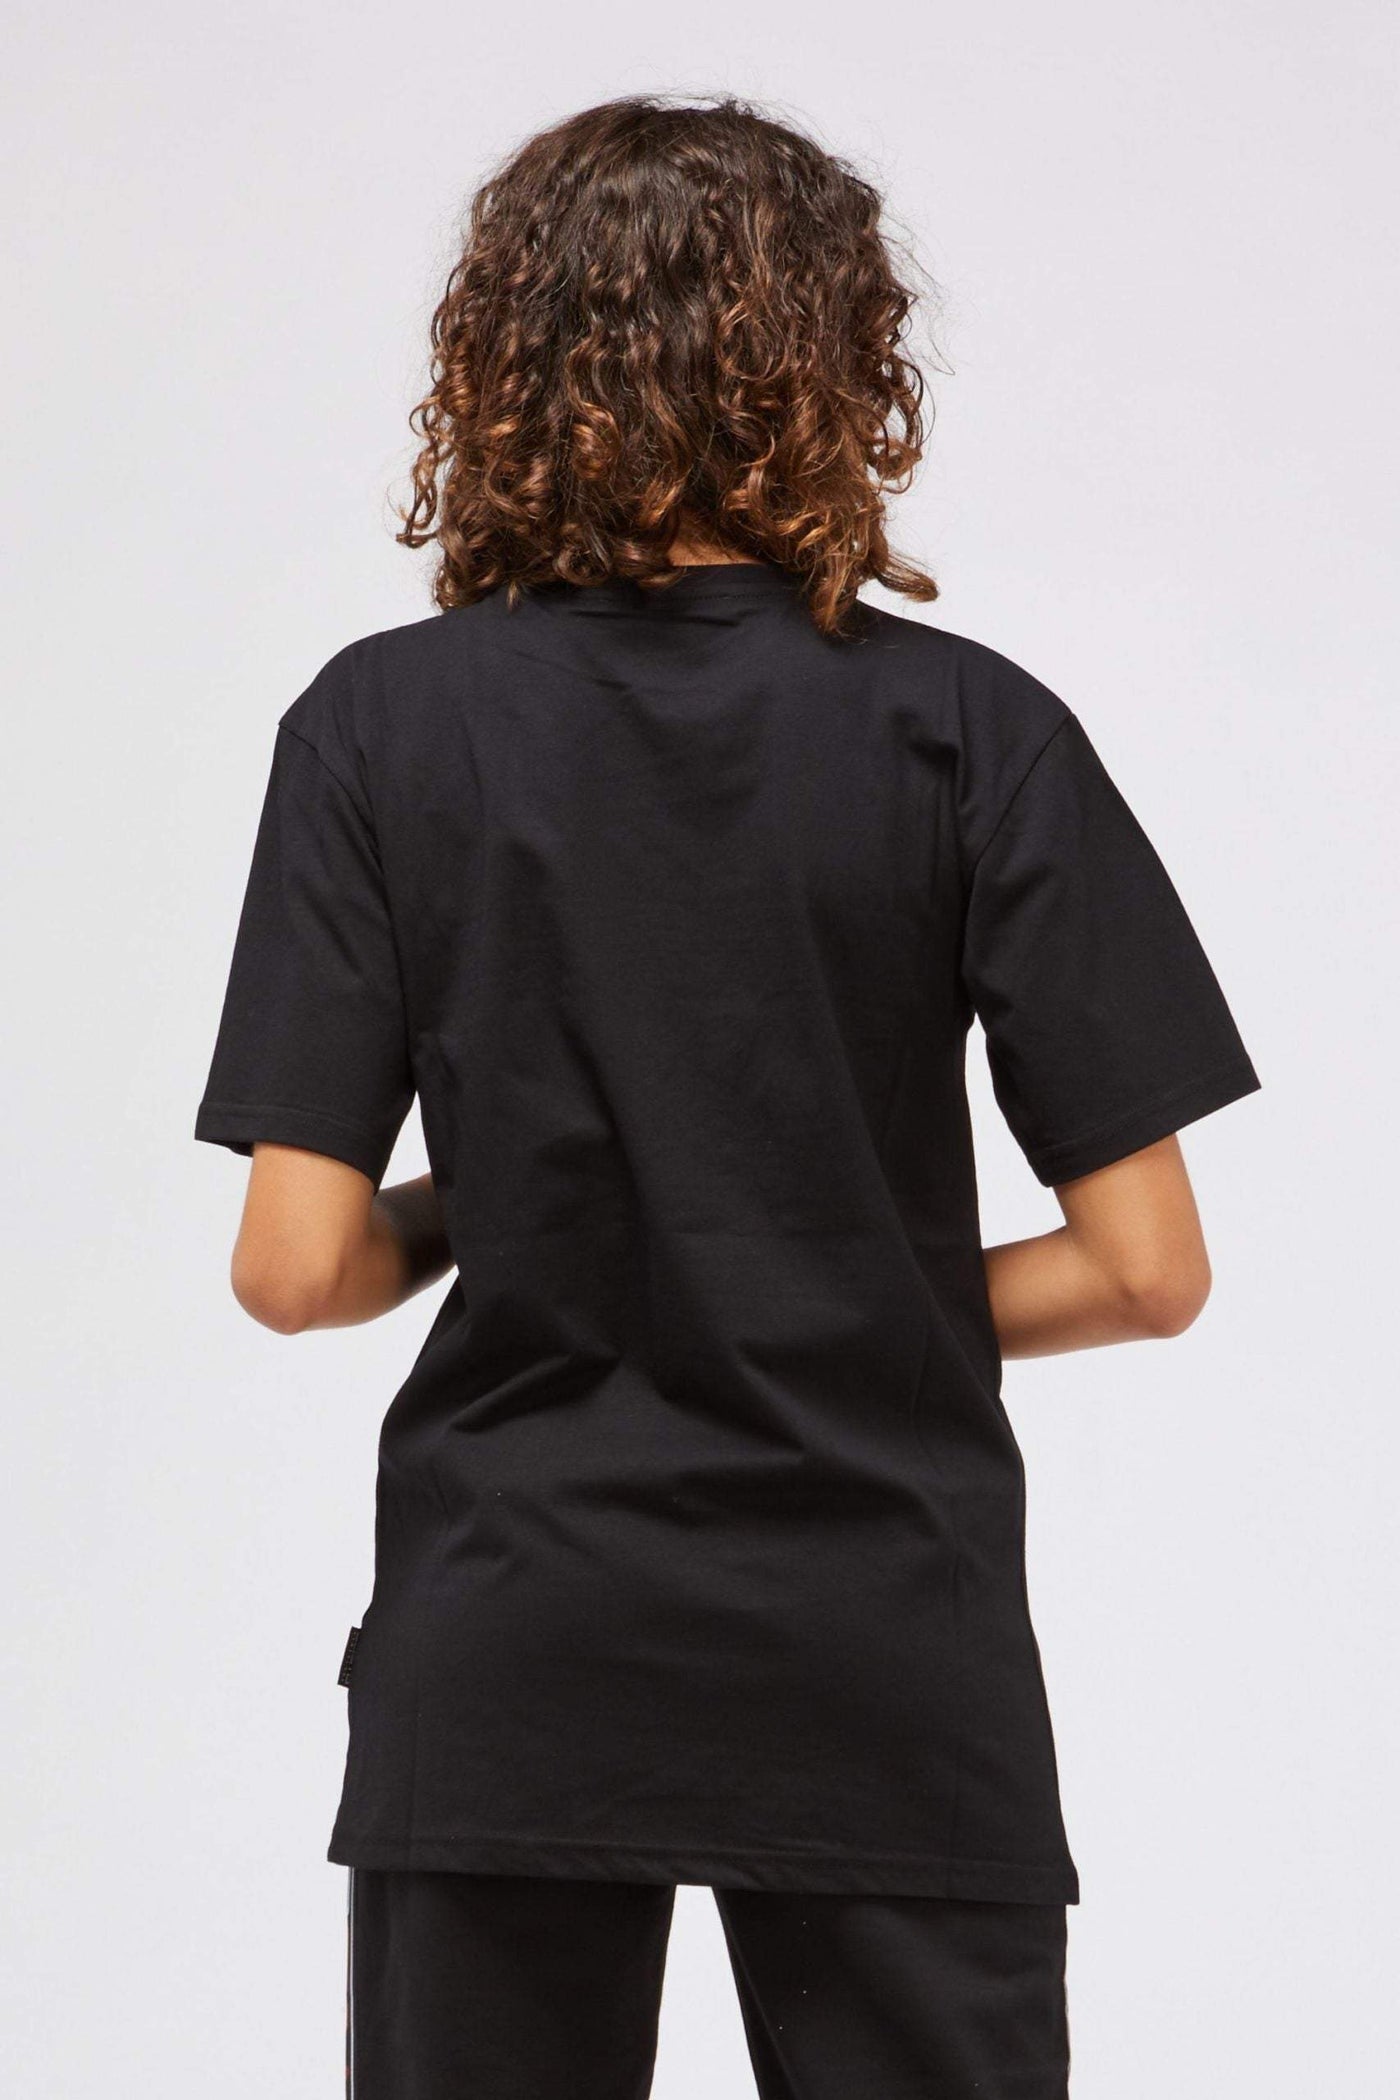 Custo Barcelona Black Cotton Tops & T-Shirt Black, Custo Barcelona, feed-1, M, S, Tops & T-Shirts - Women - Clothing at SEYMAYKA